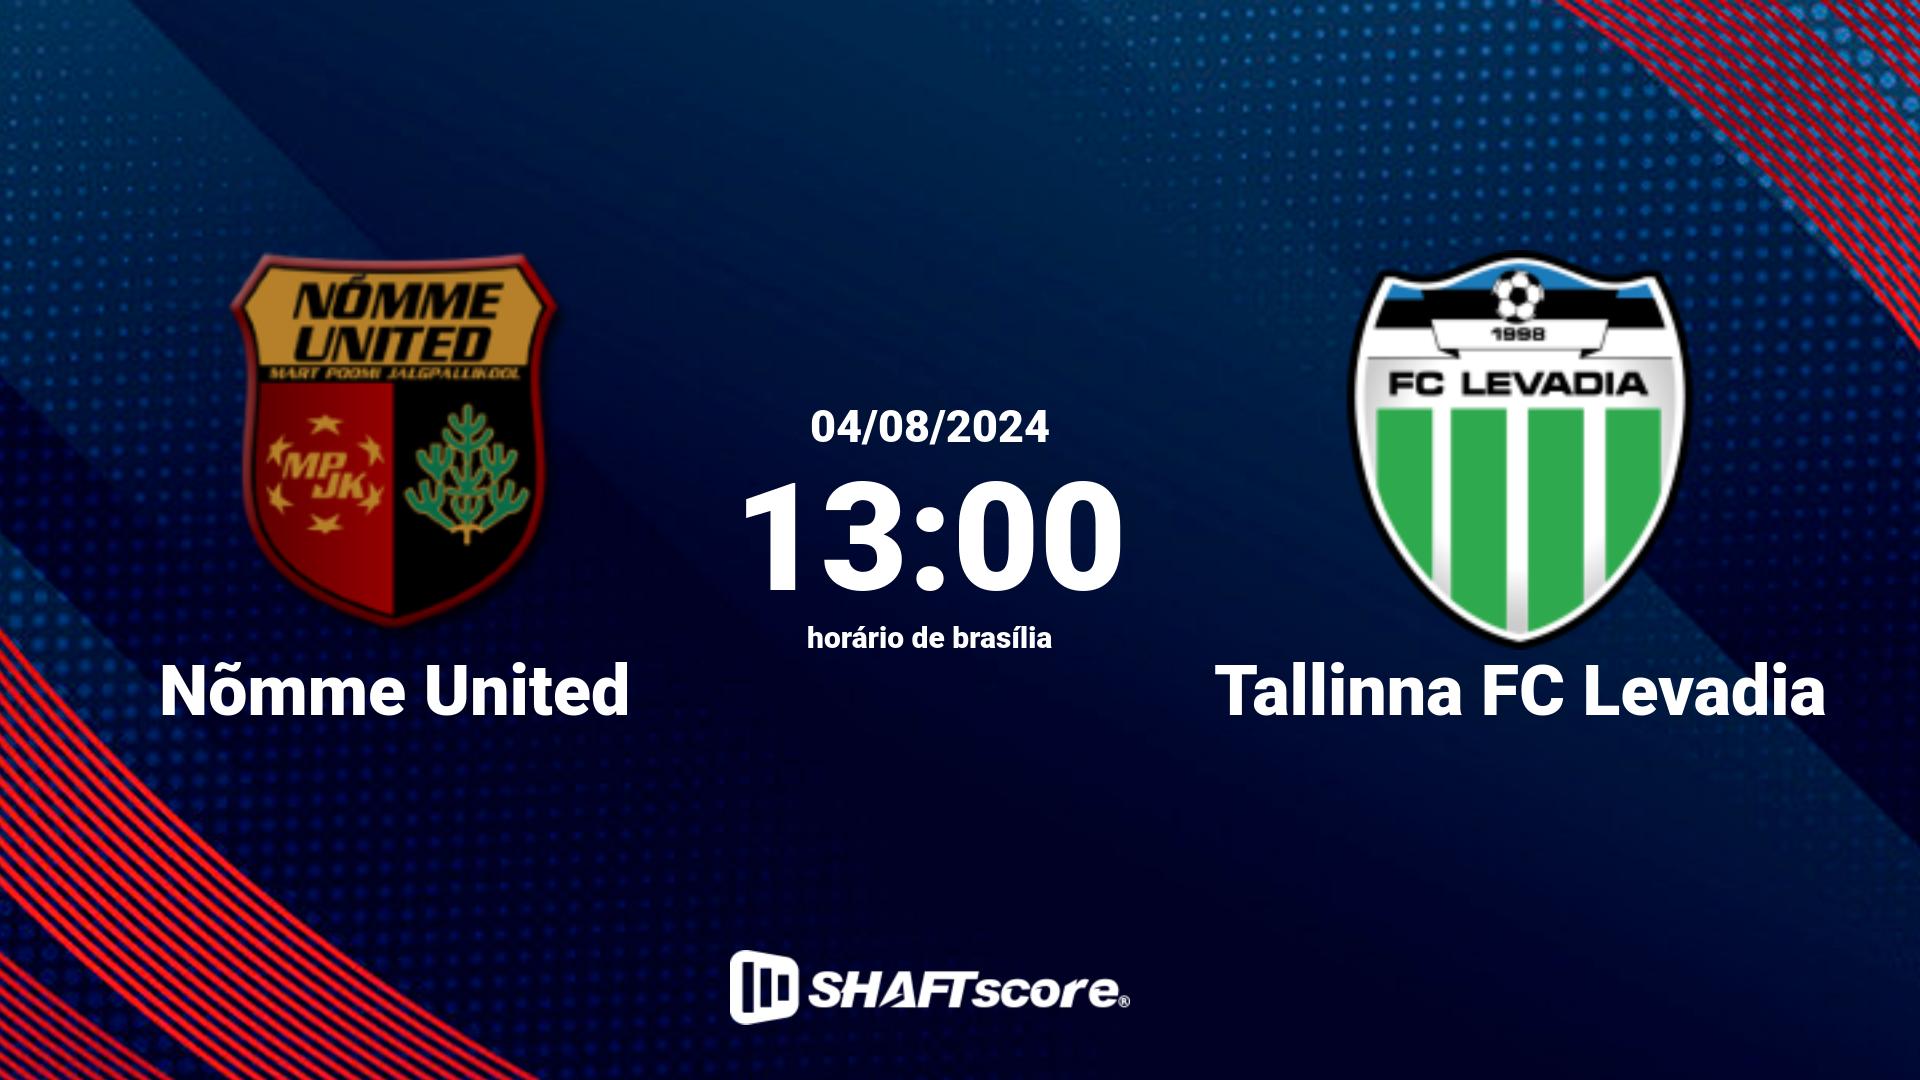 Estatísticas do jogo Nõmme United vs Tallinna FC Levadia 04.08 13:00